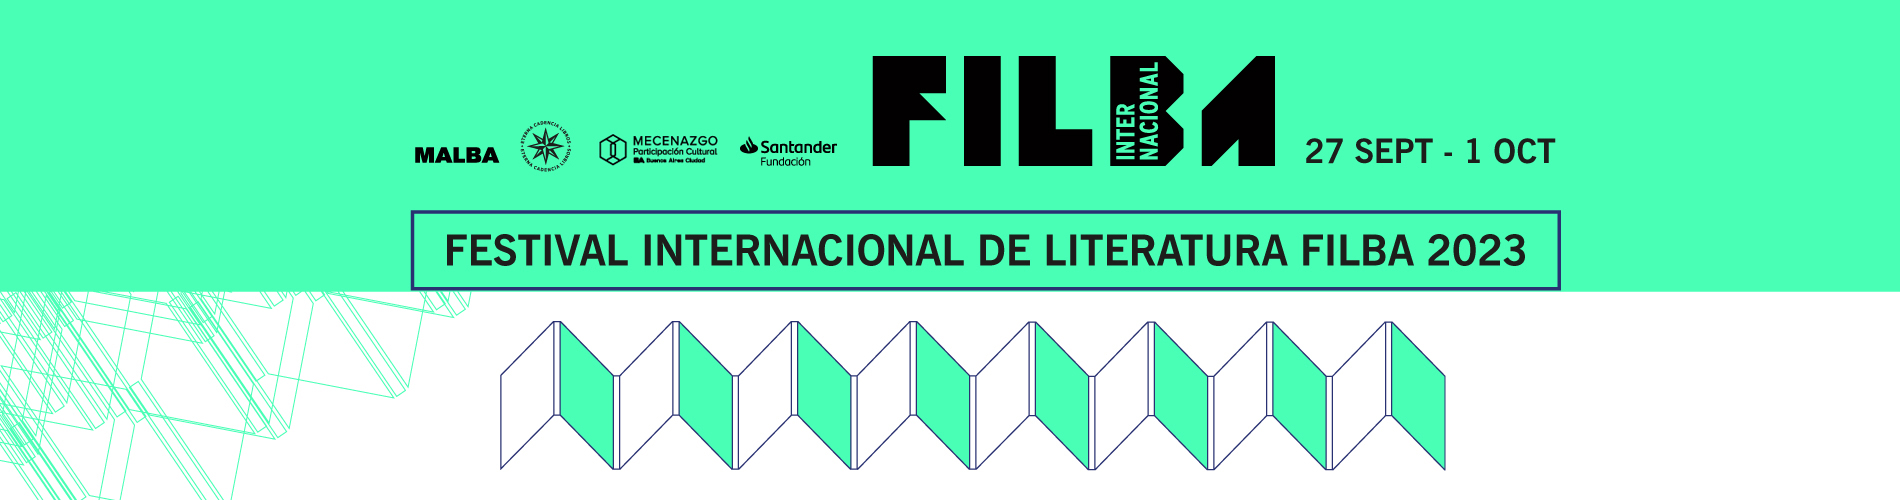 Festival Internacional de Literatura Filba 2023